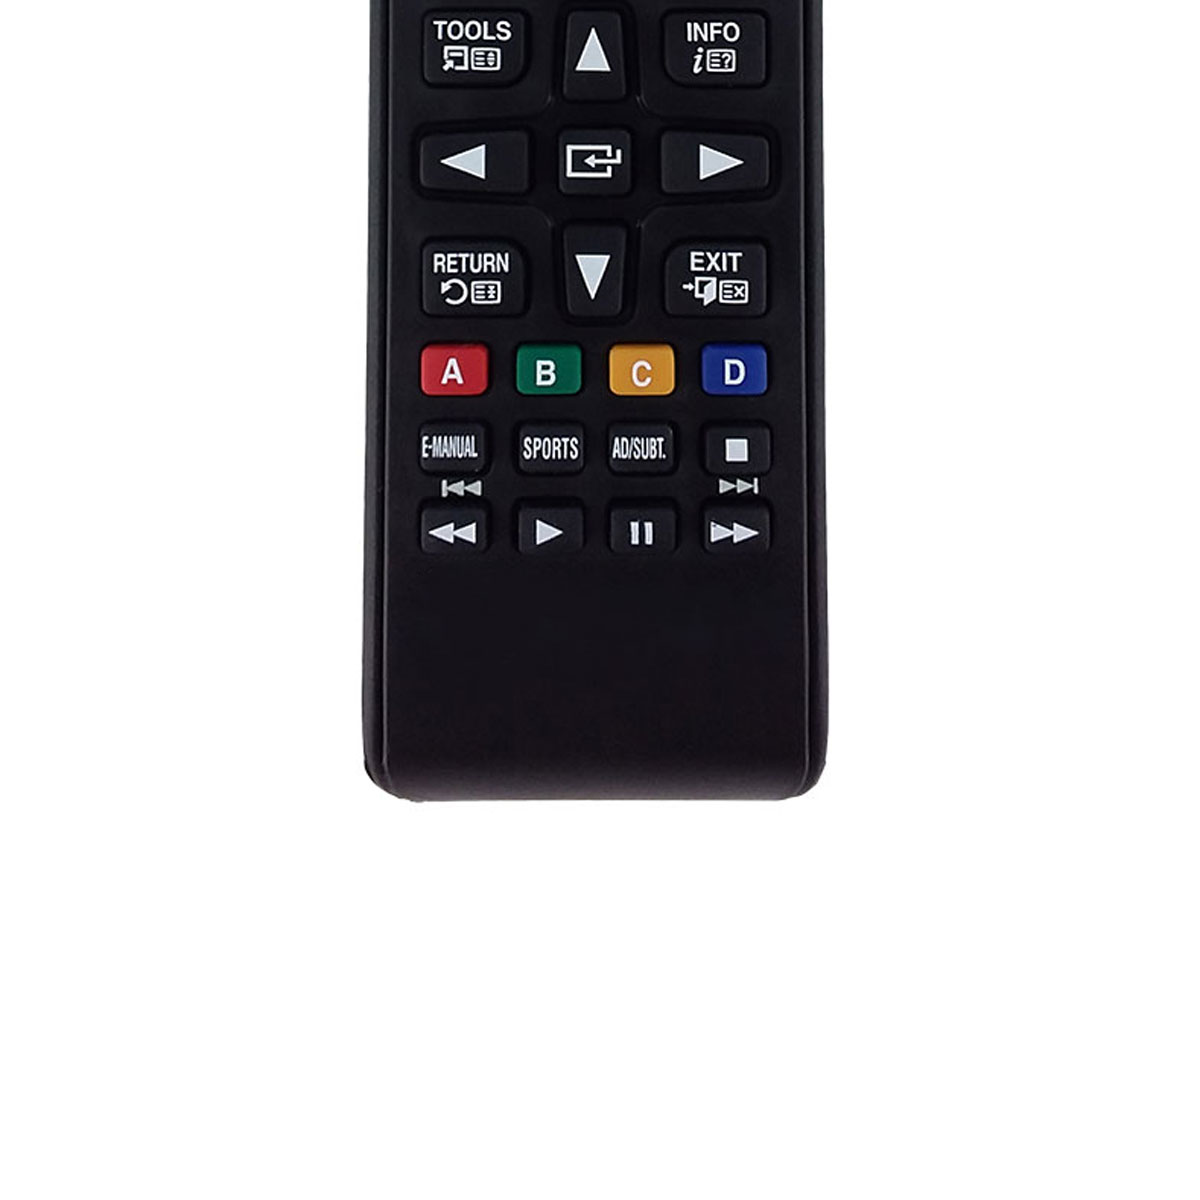 AuraBeam Replacement TV Remote Control for Samsung UA55JU6000 Television